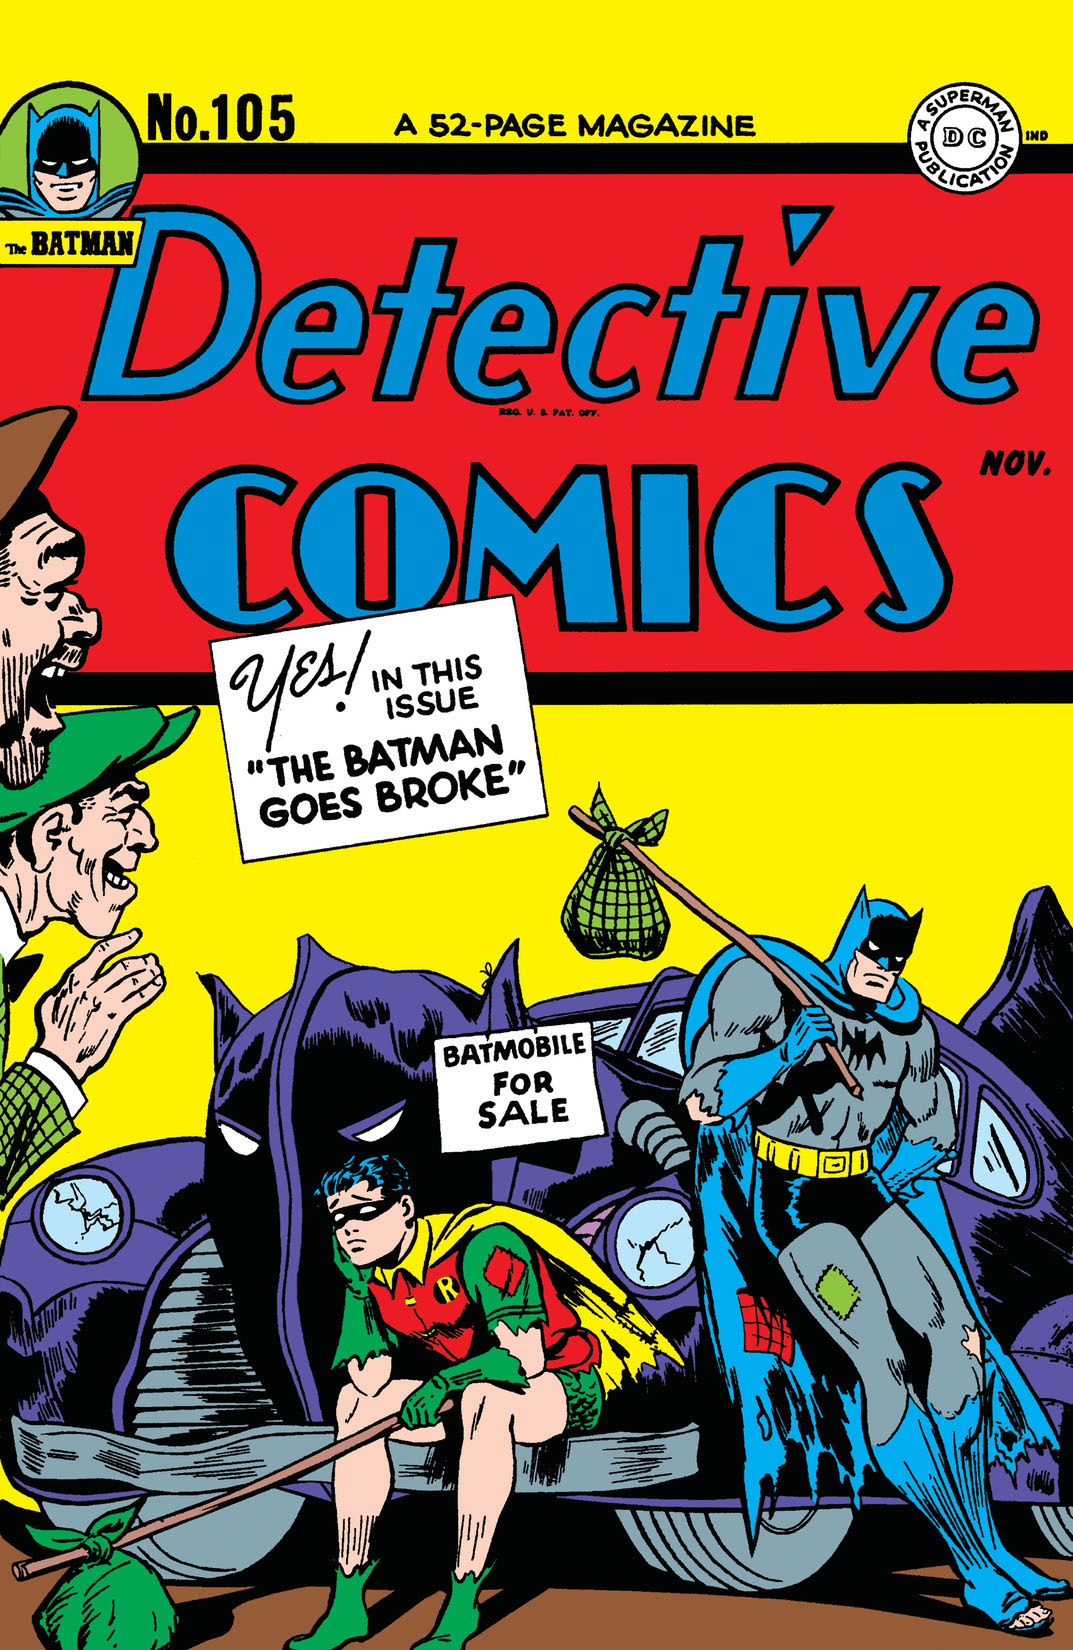 Detective Comics (1937-) #105 preview images